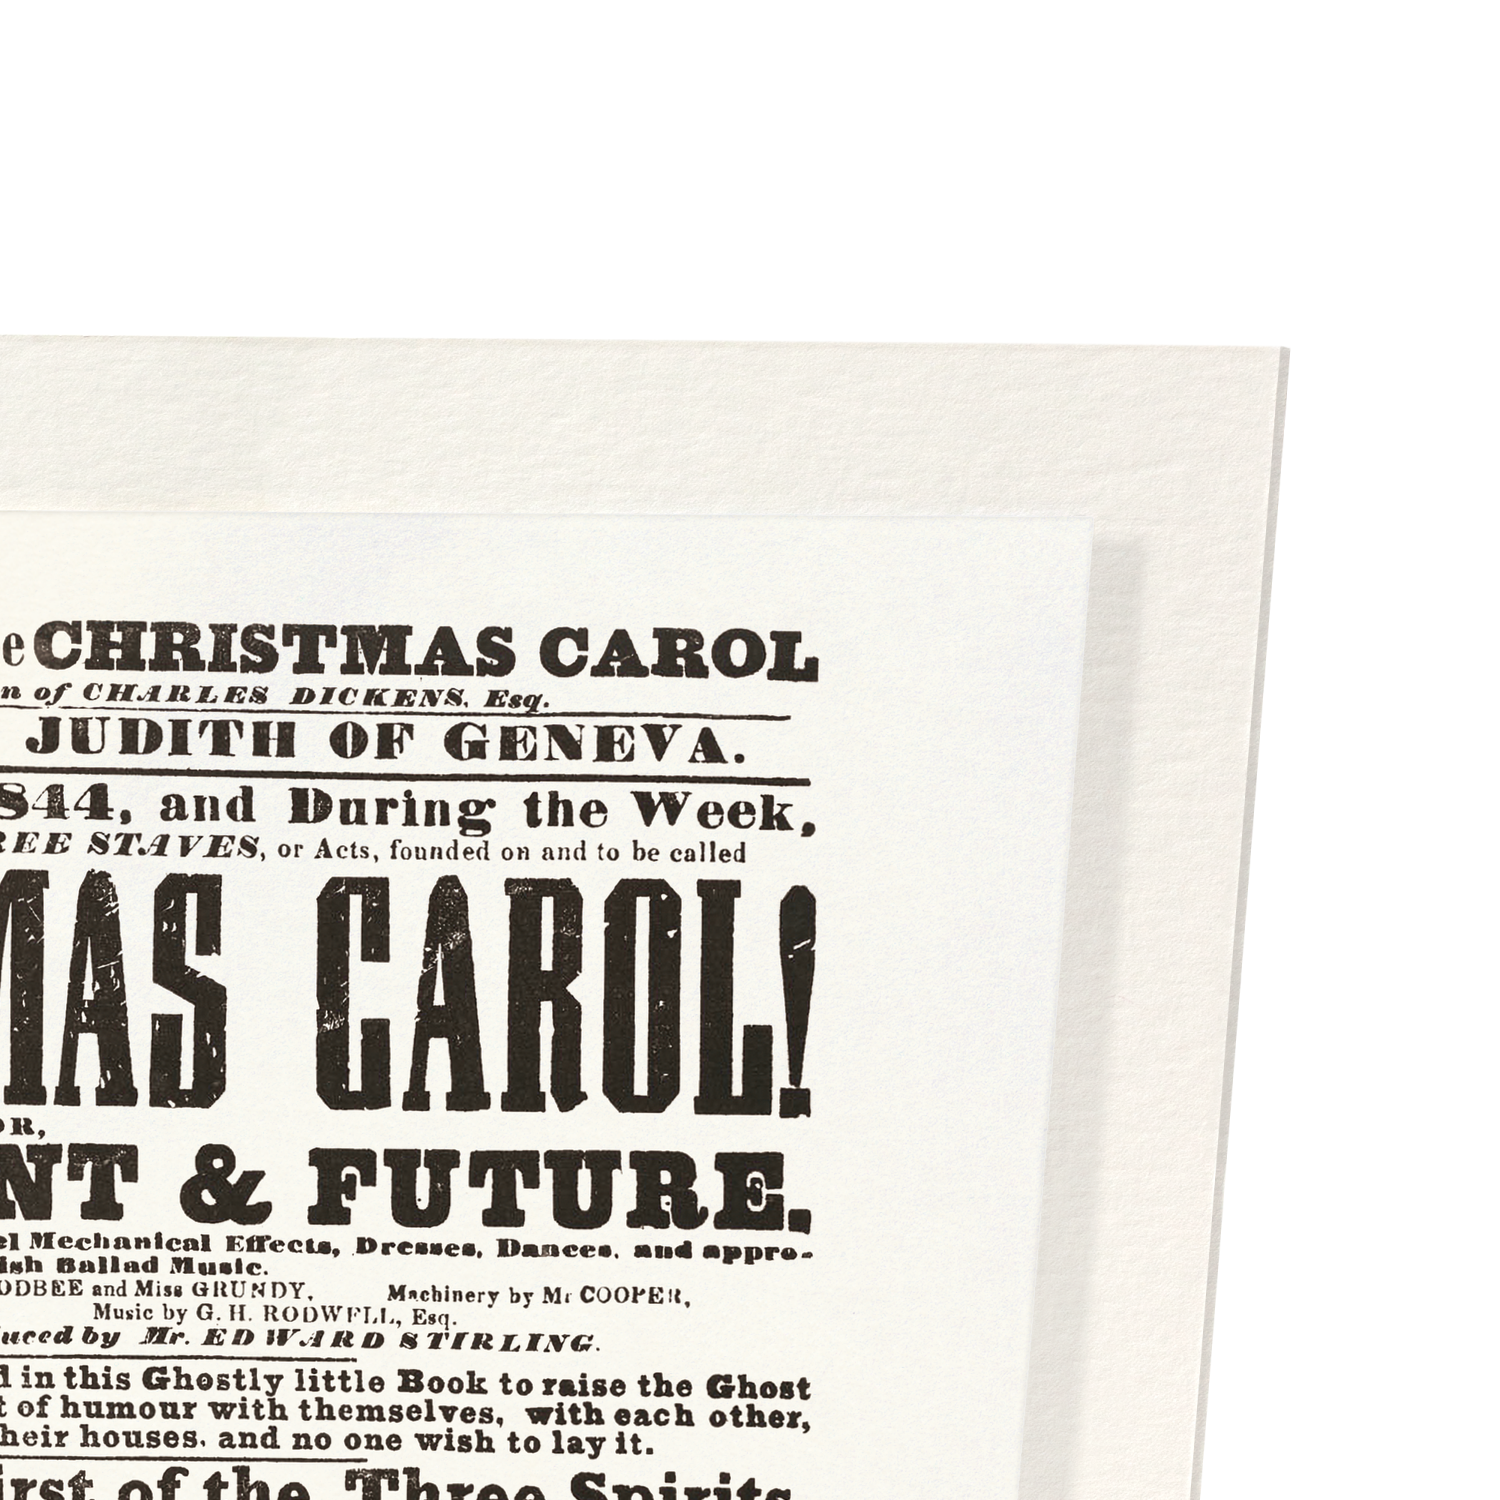 PLAYBILL OF A CHRISTMAS CAROL (1844)